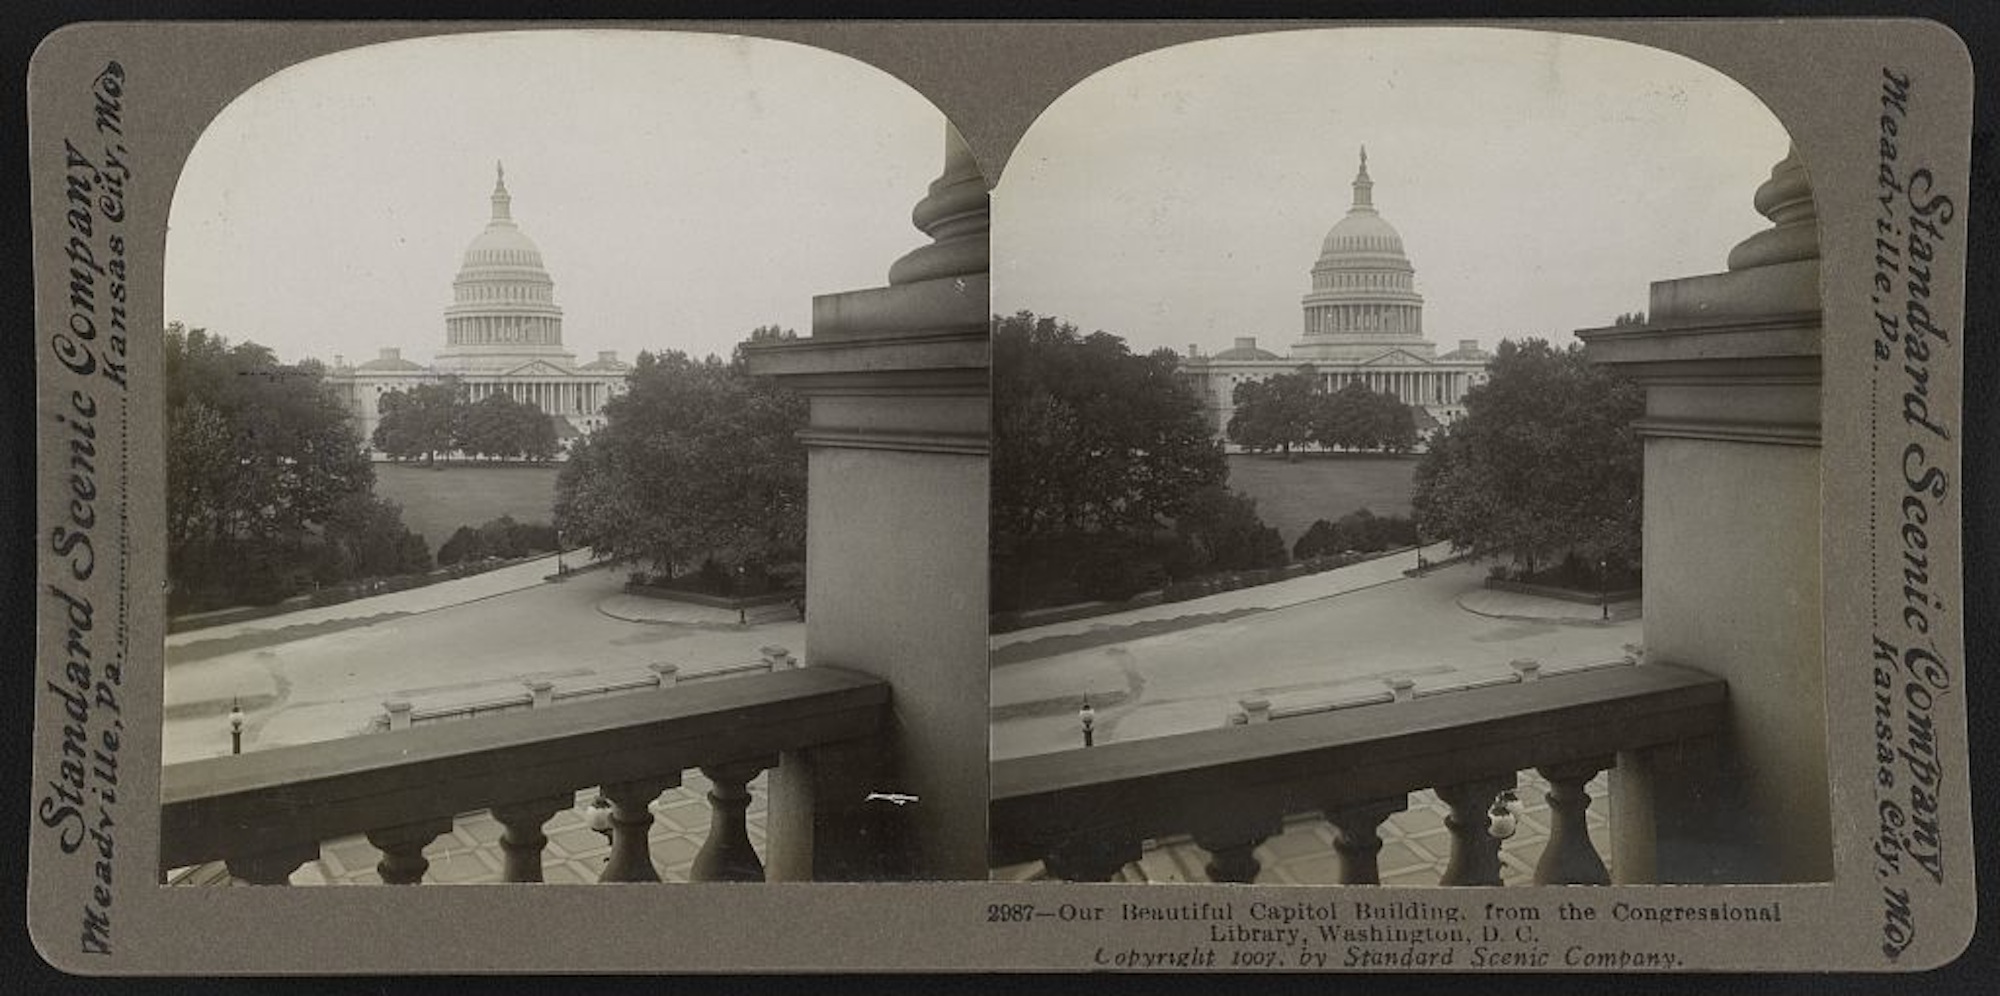 U.S. Capitol View